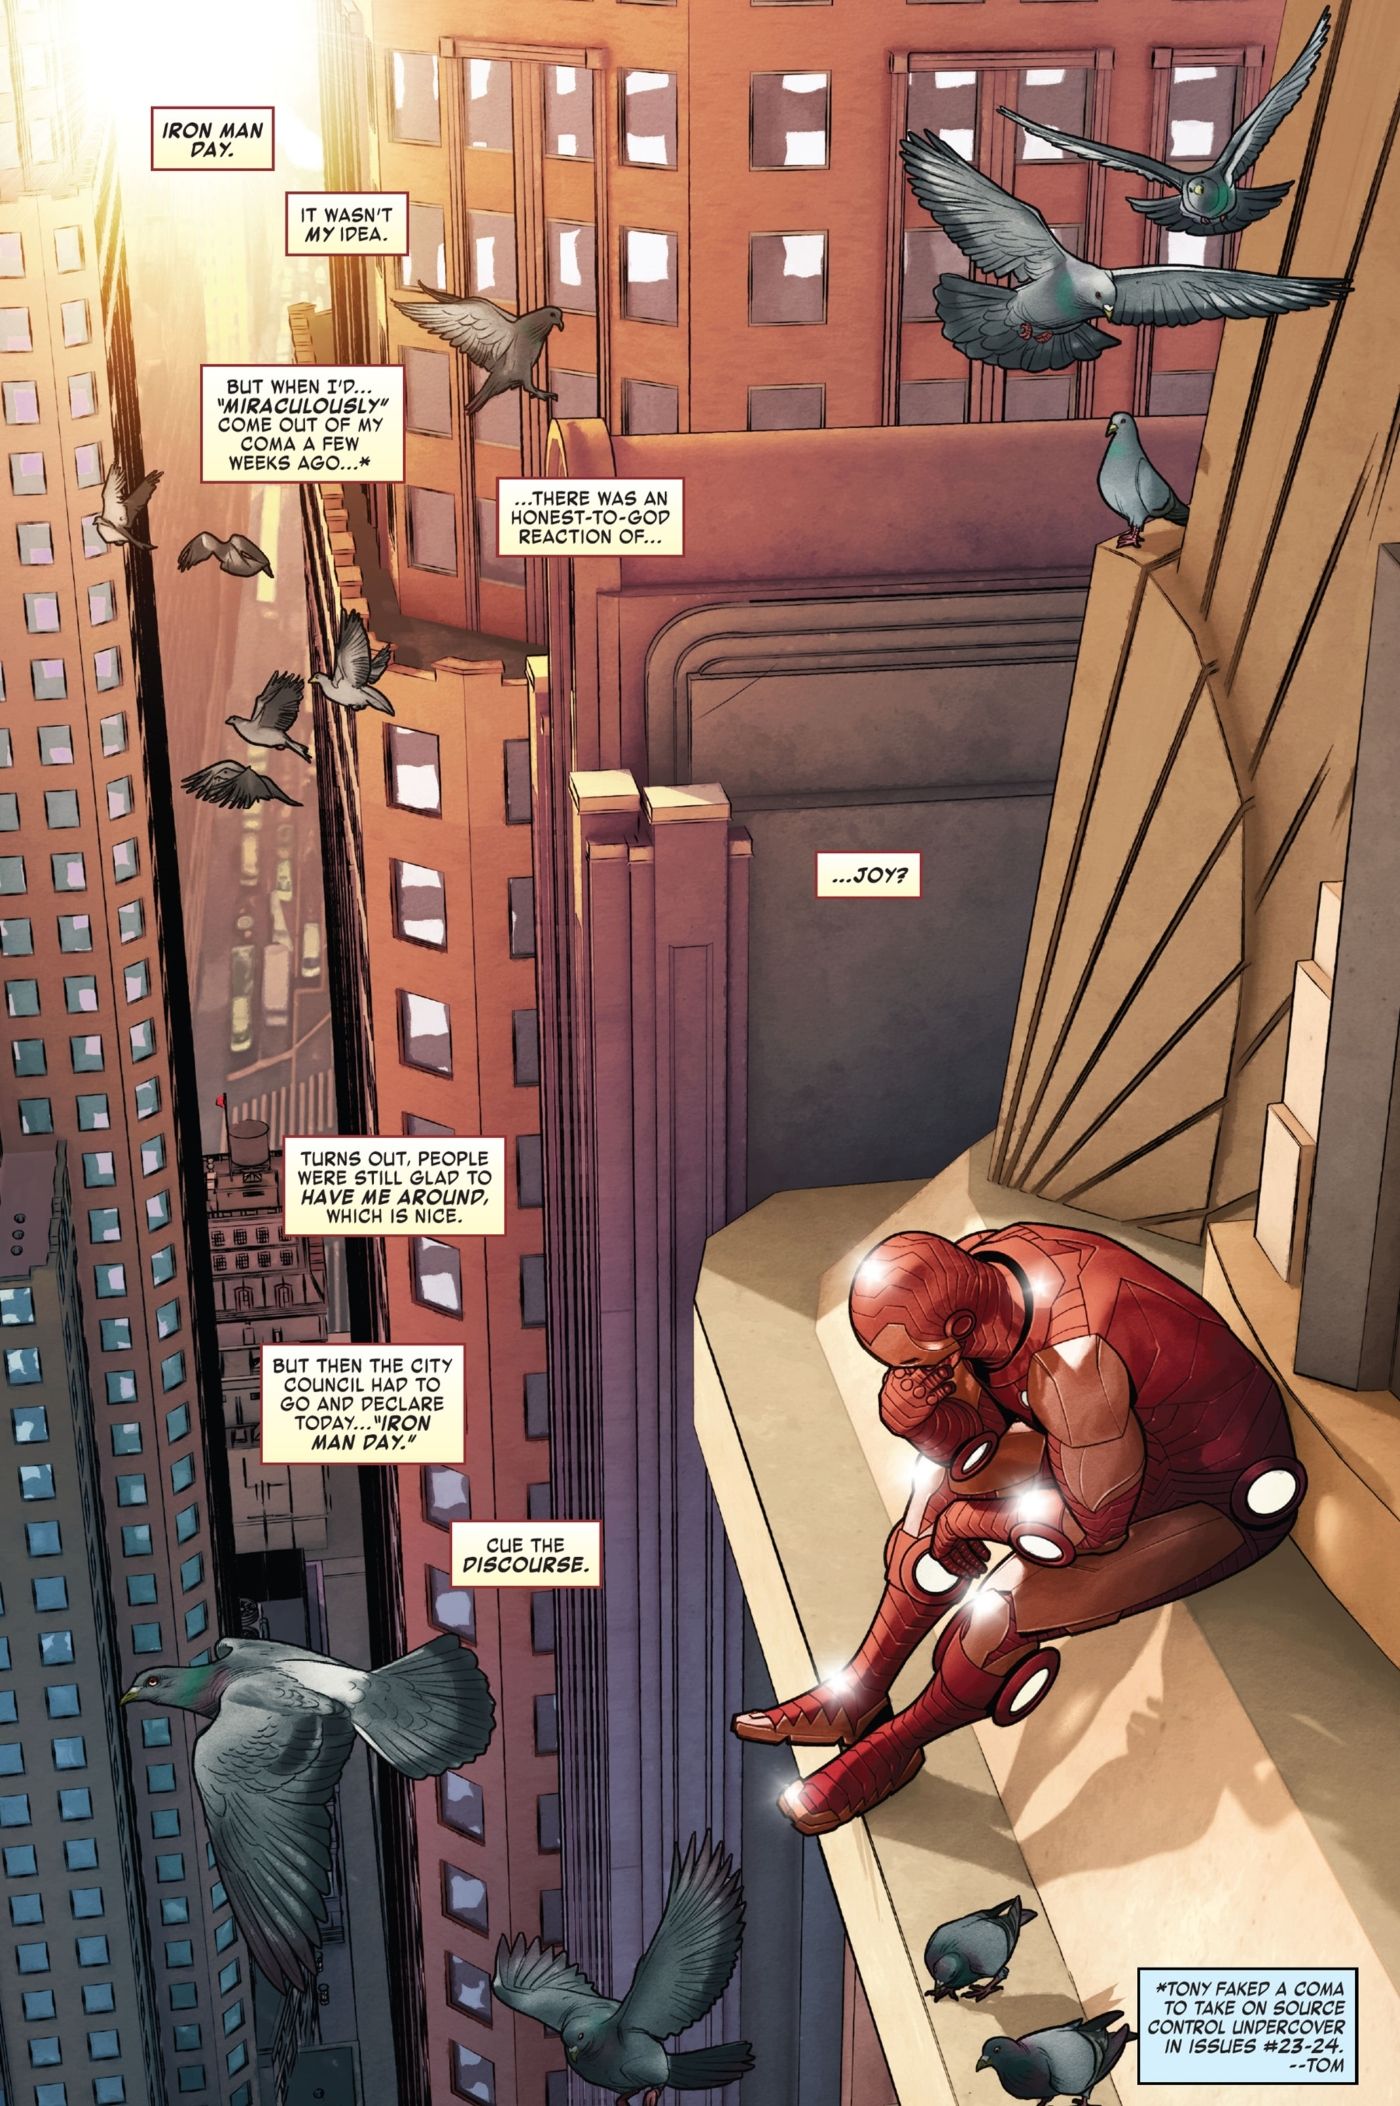 Marvel Comics flipped Iron Man's MCU legacy.